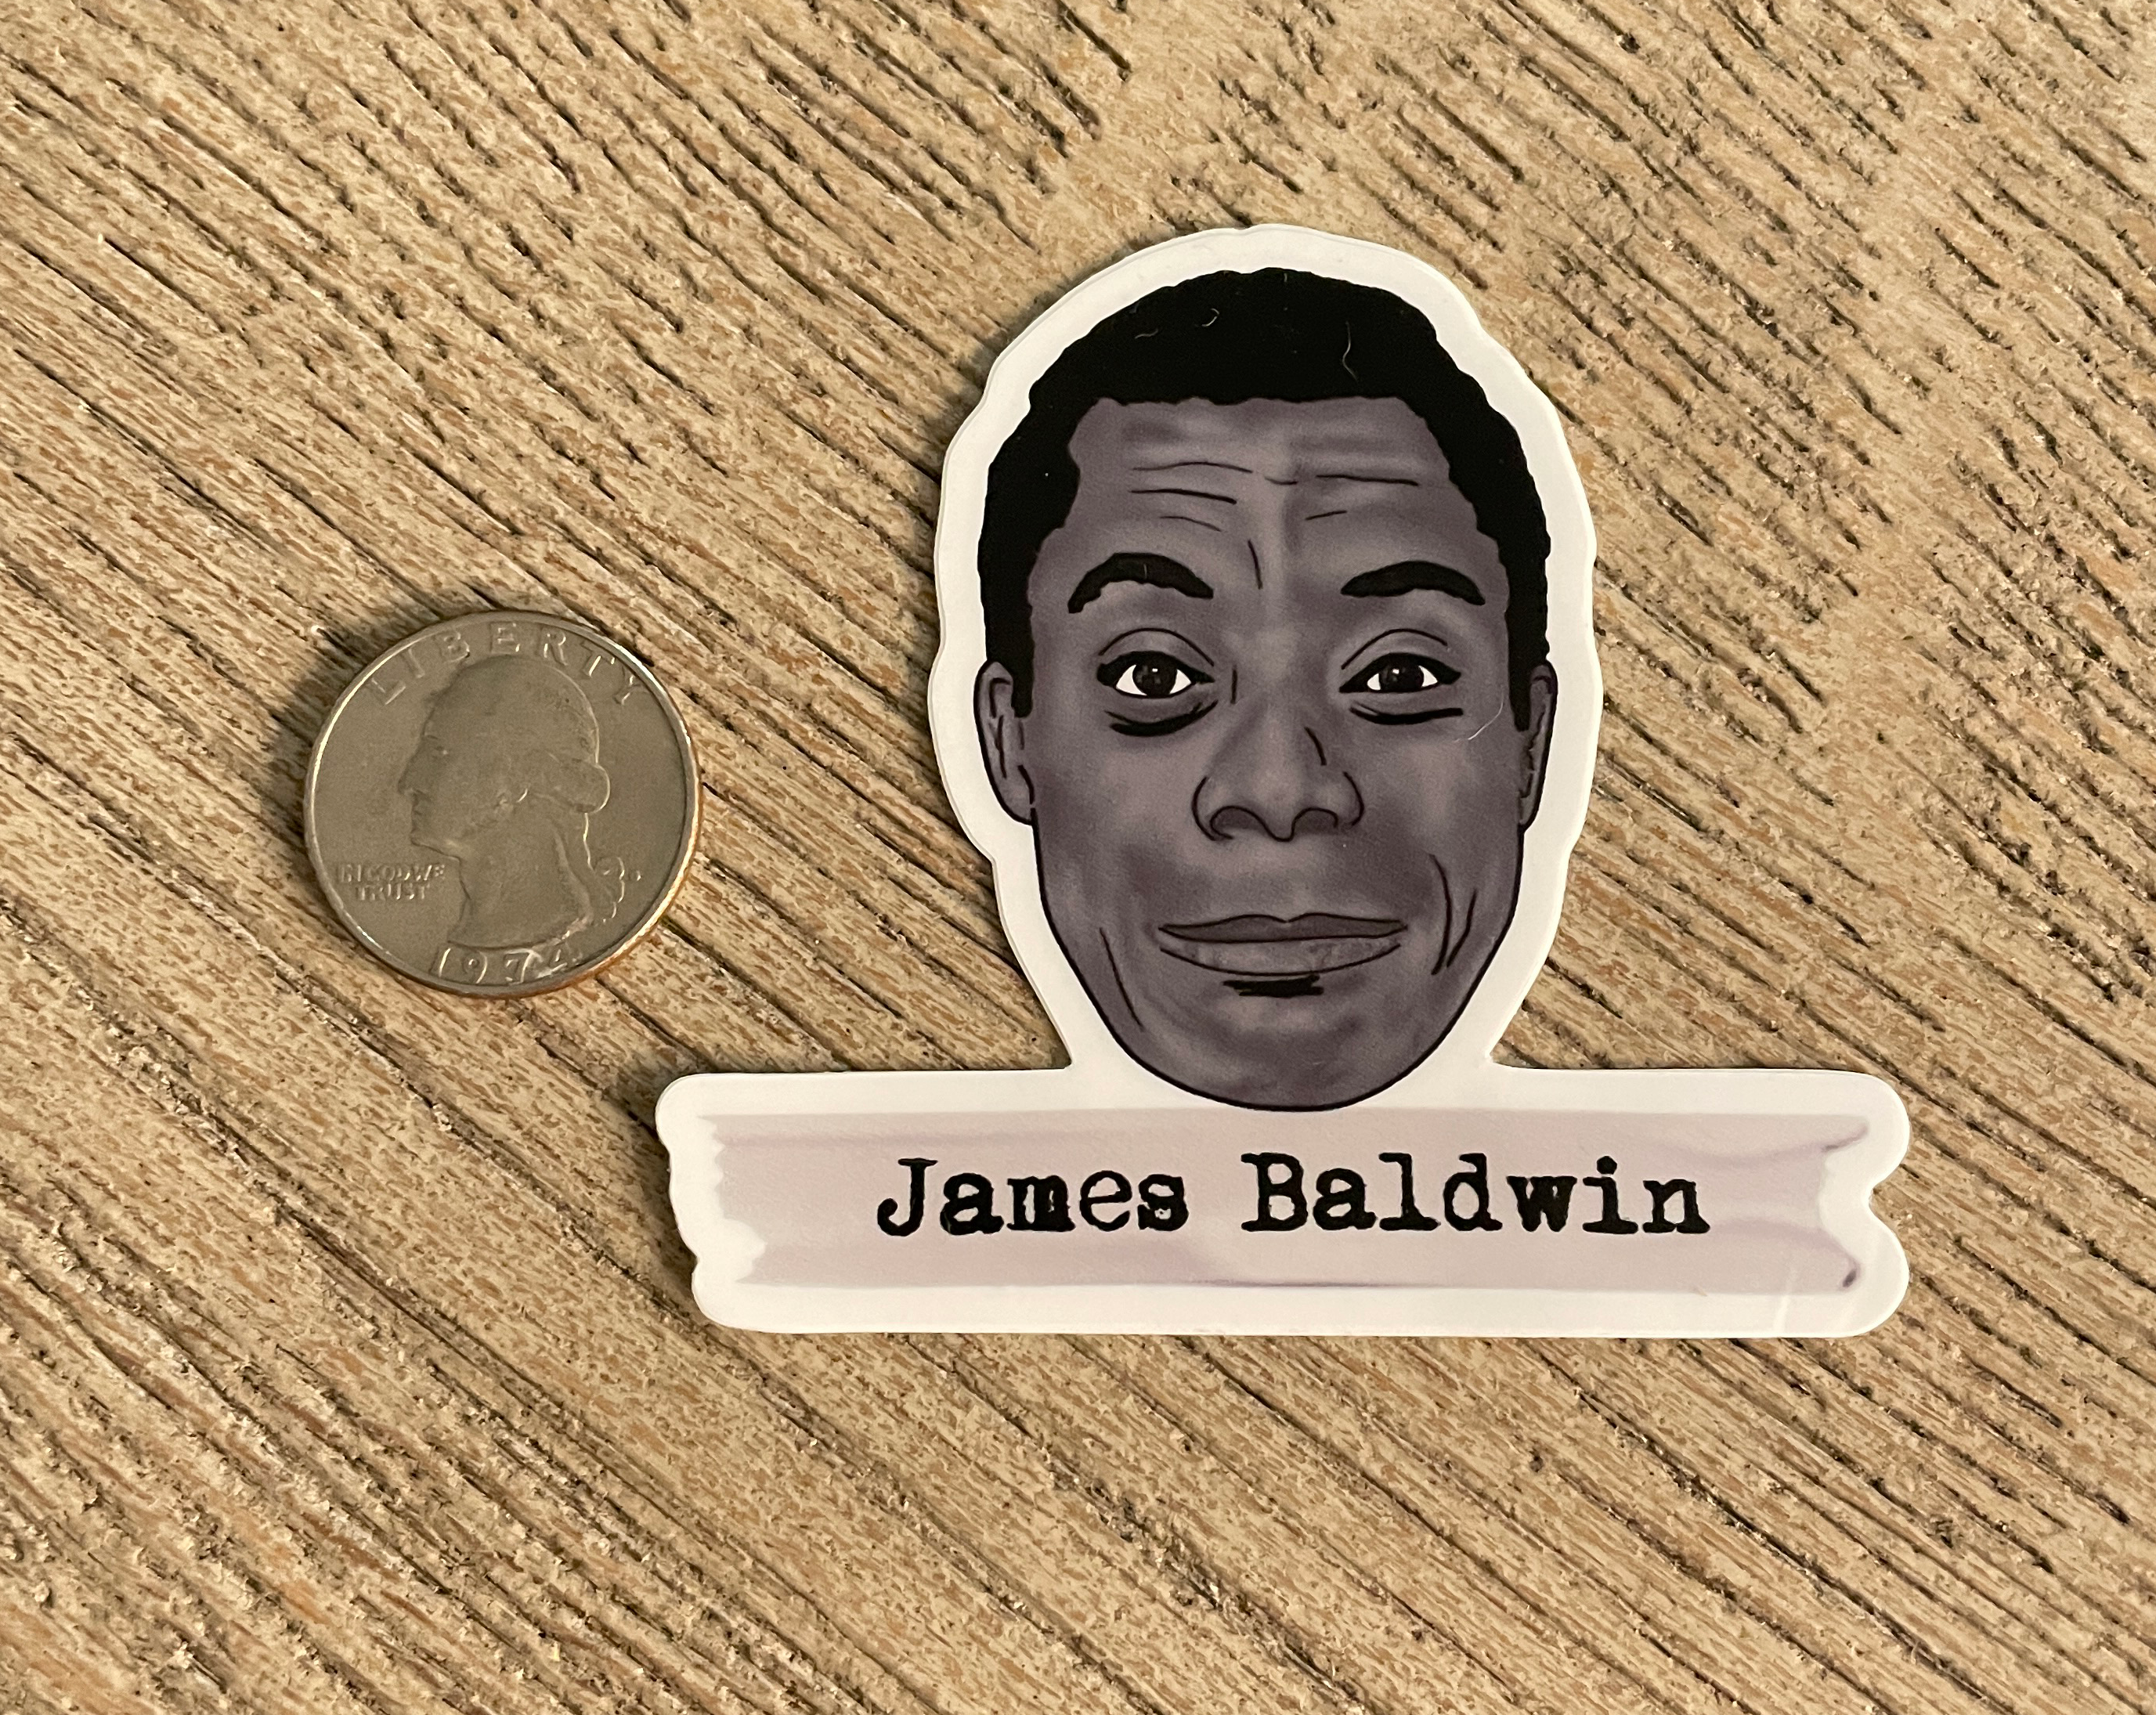 James Baldwin Sticker - Literary Heroes